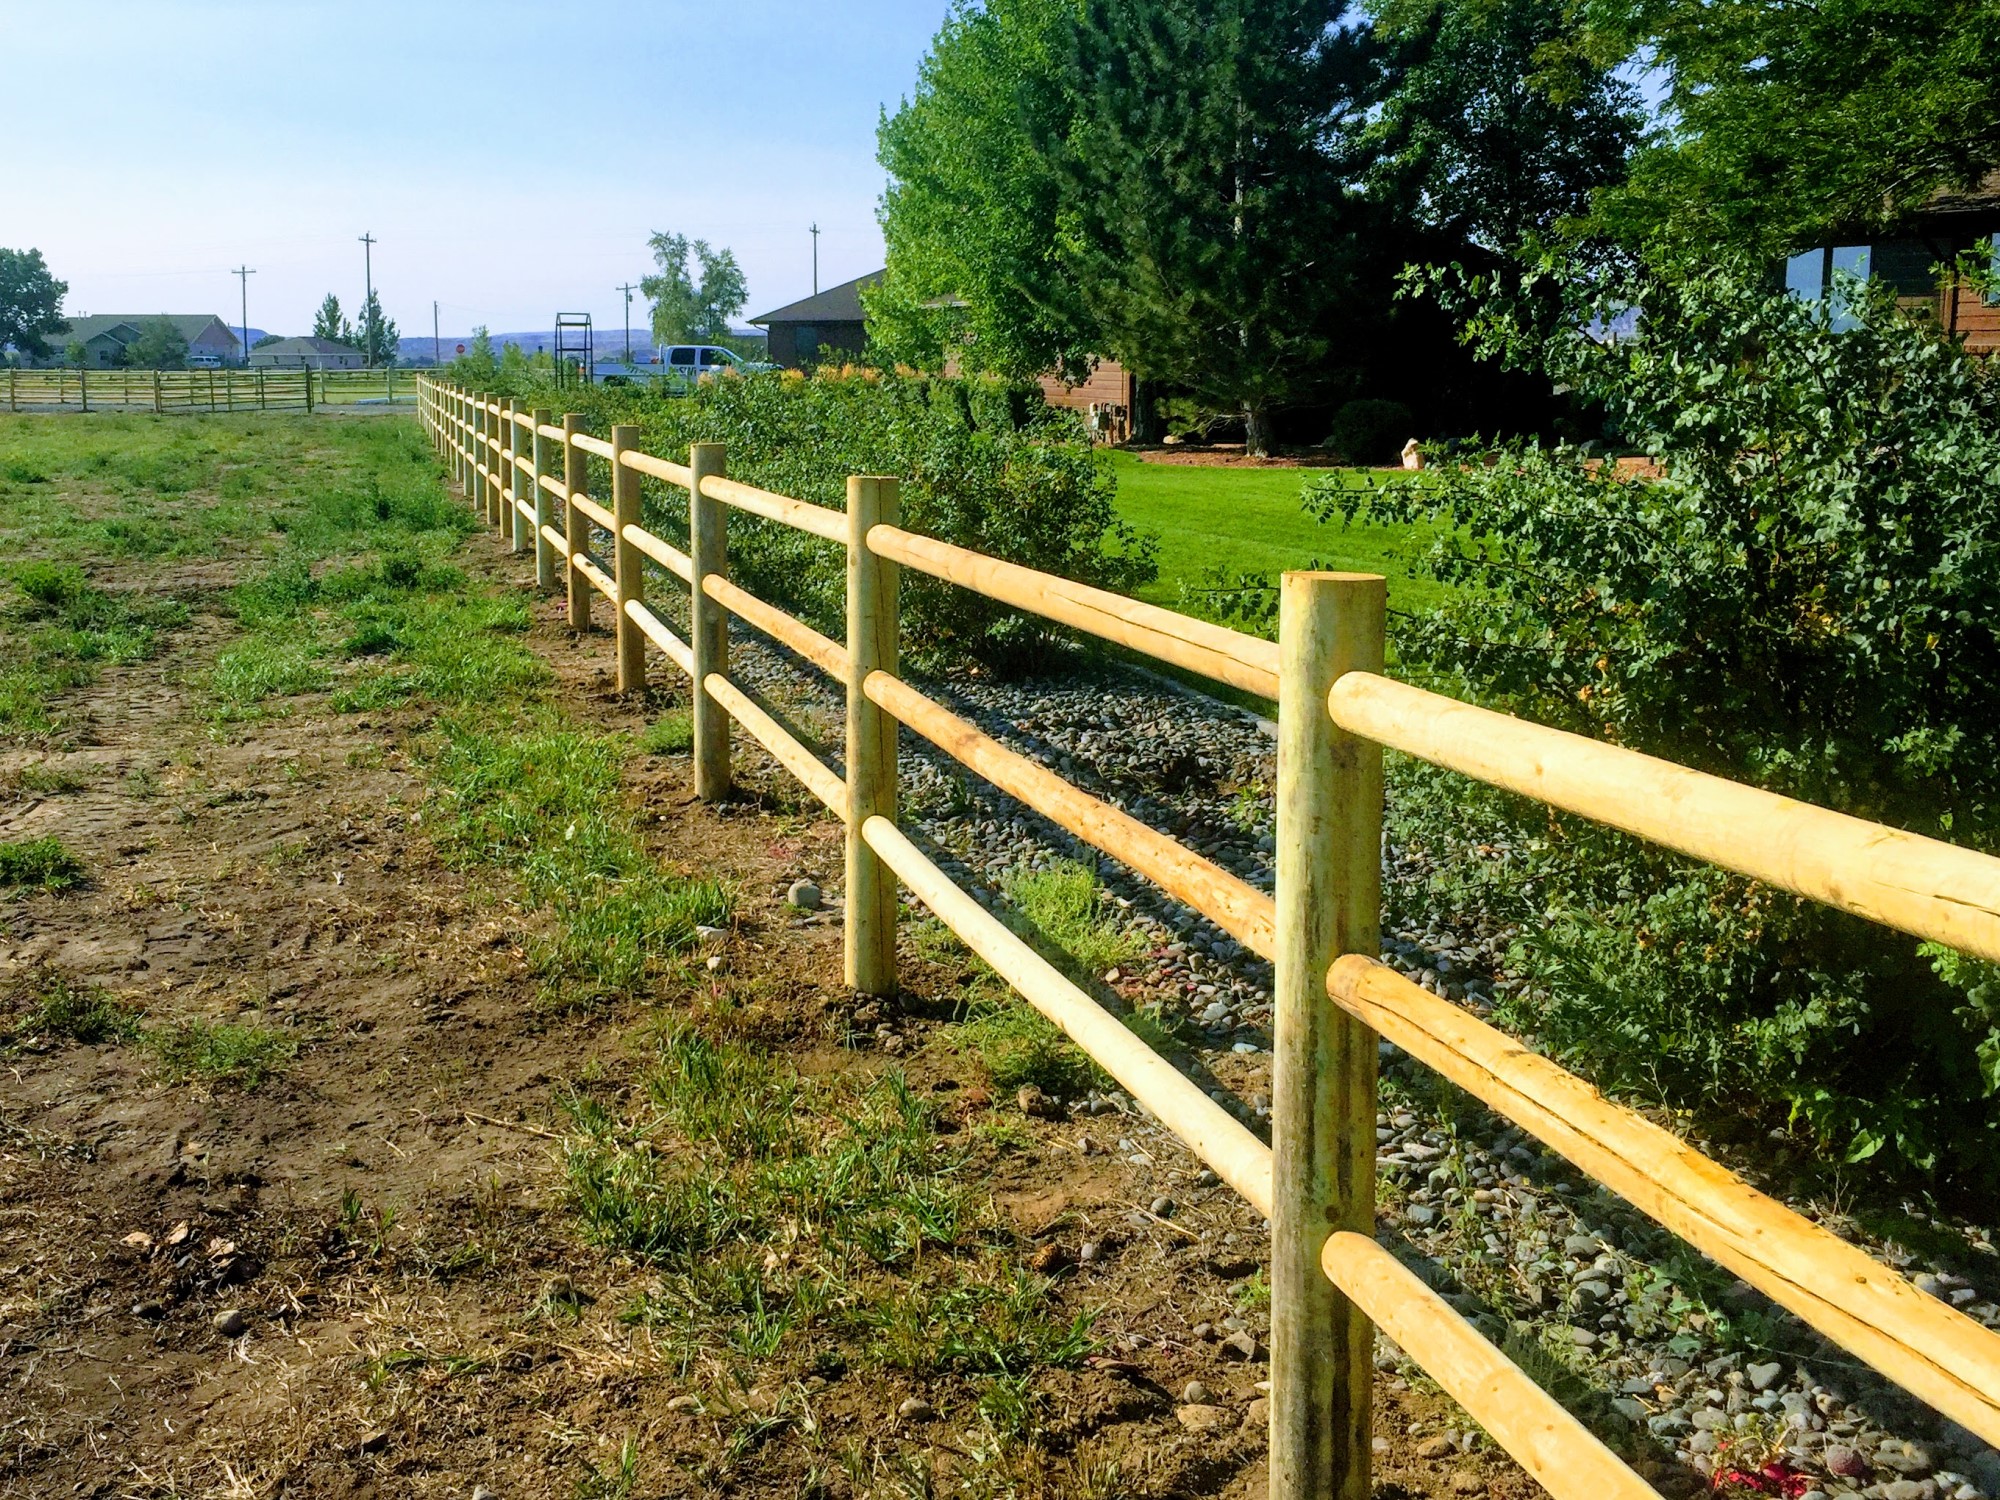 Photo of a 3 rail split rail wood fence